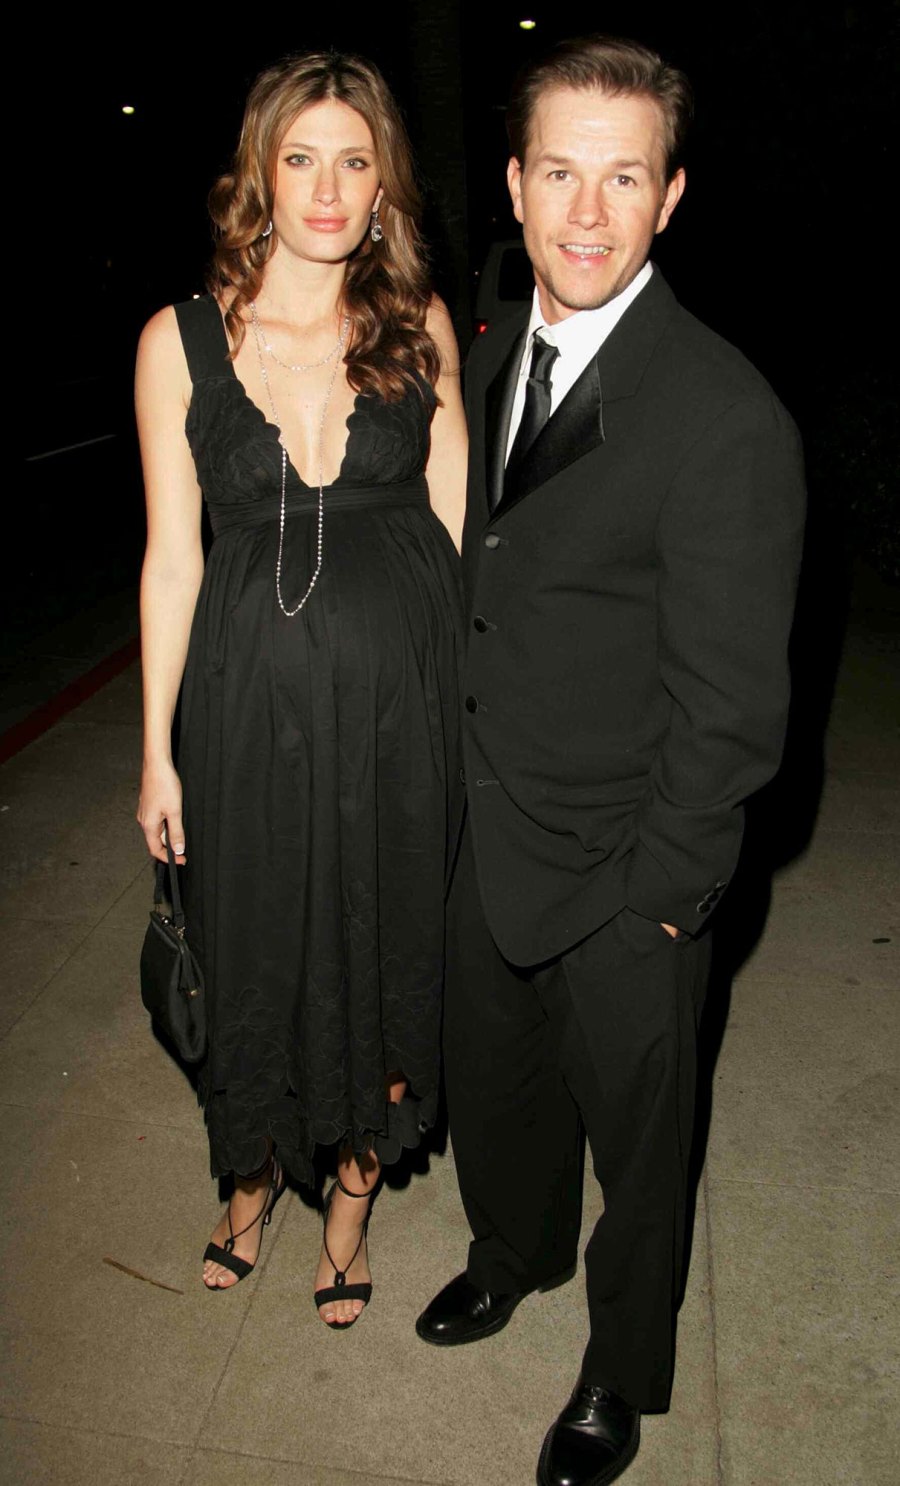 2006 Mark Wahlberg and Rhea Durham Relationship Timeline